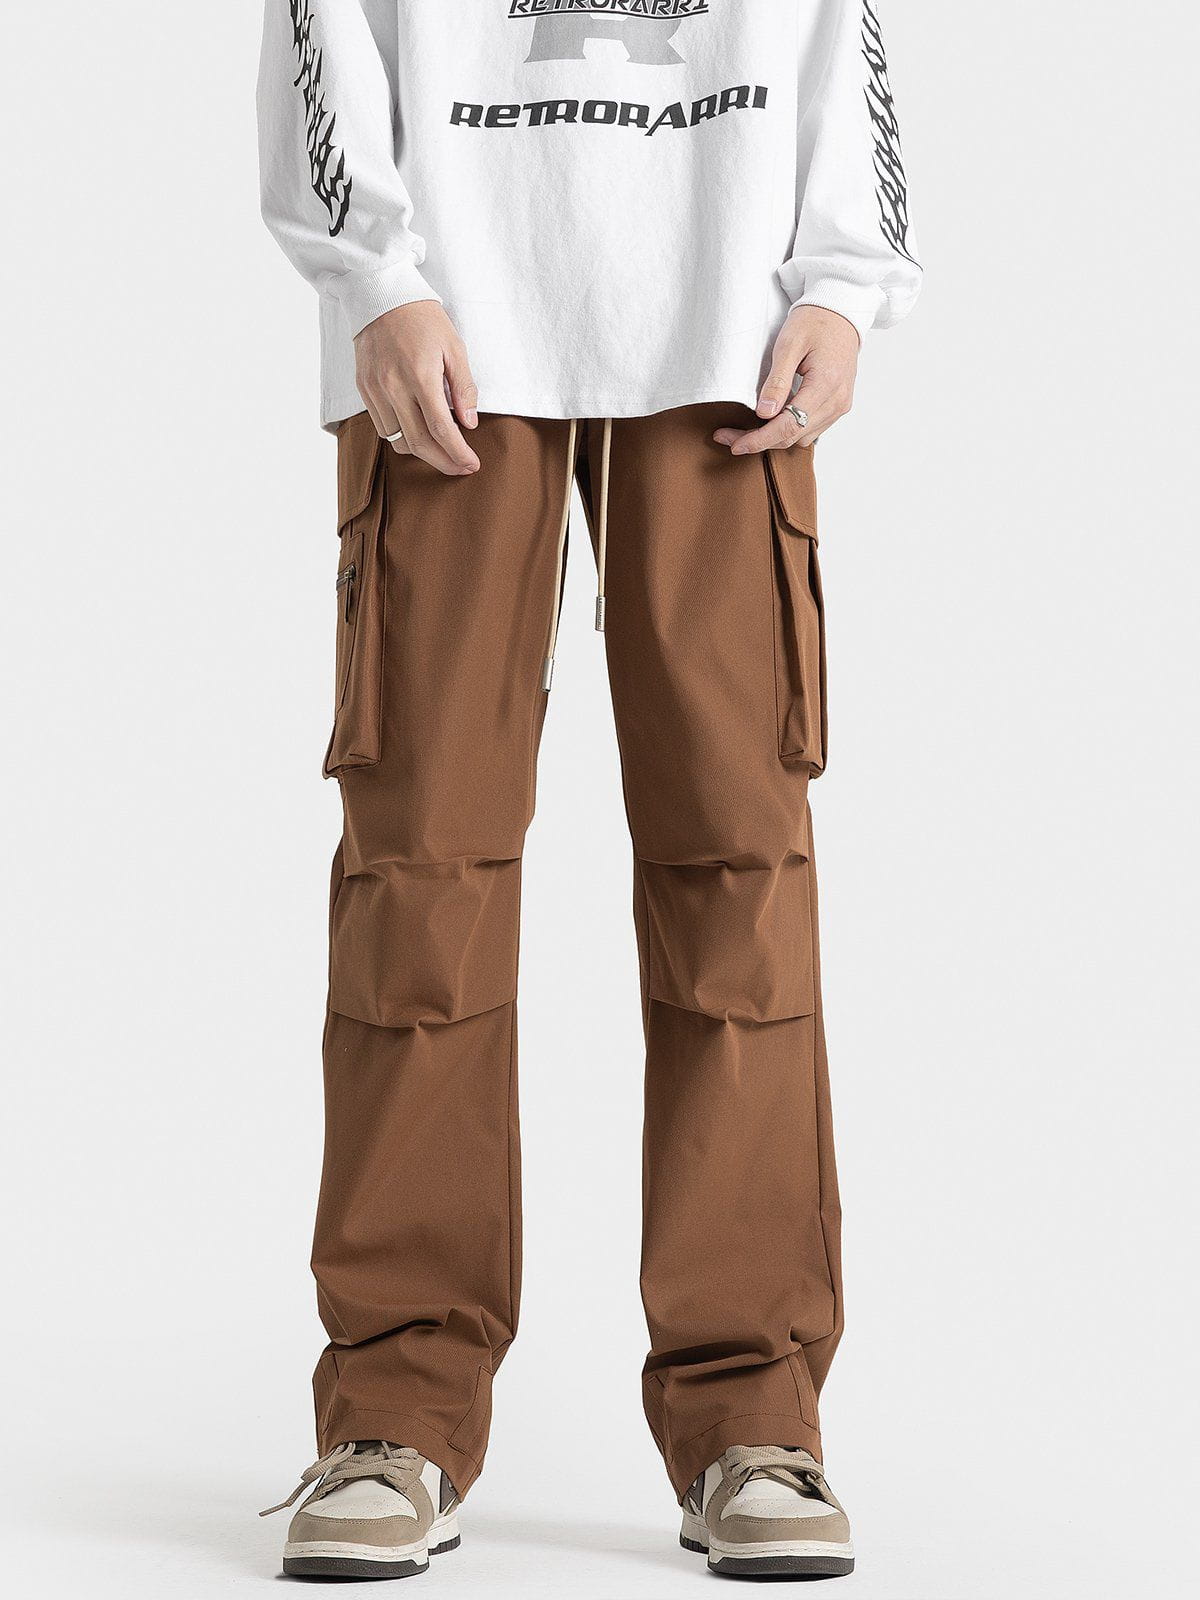 Majesda® - Zip Large Multi-Pocket Cargo Pants outfit ideas streetwear fashion